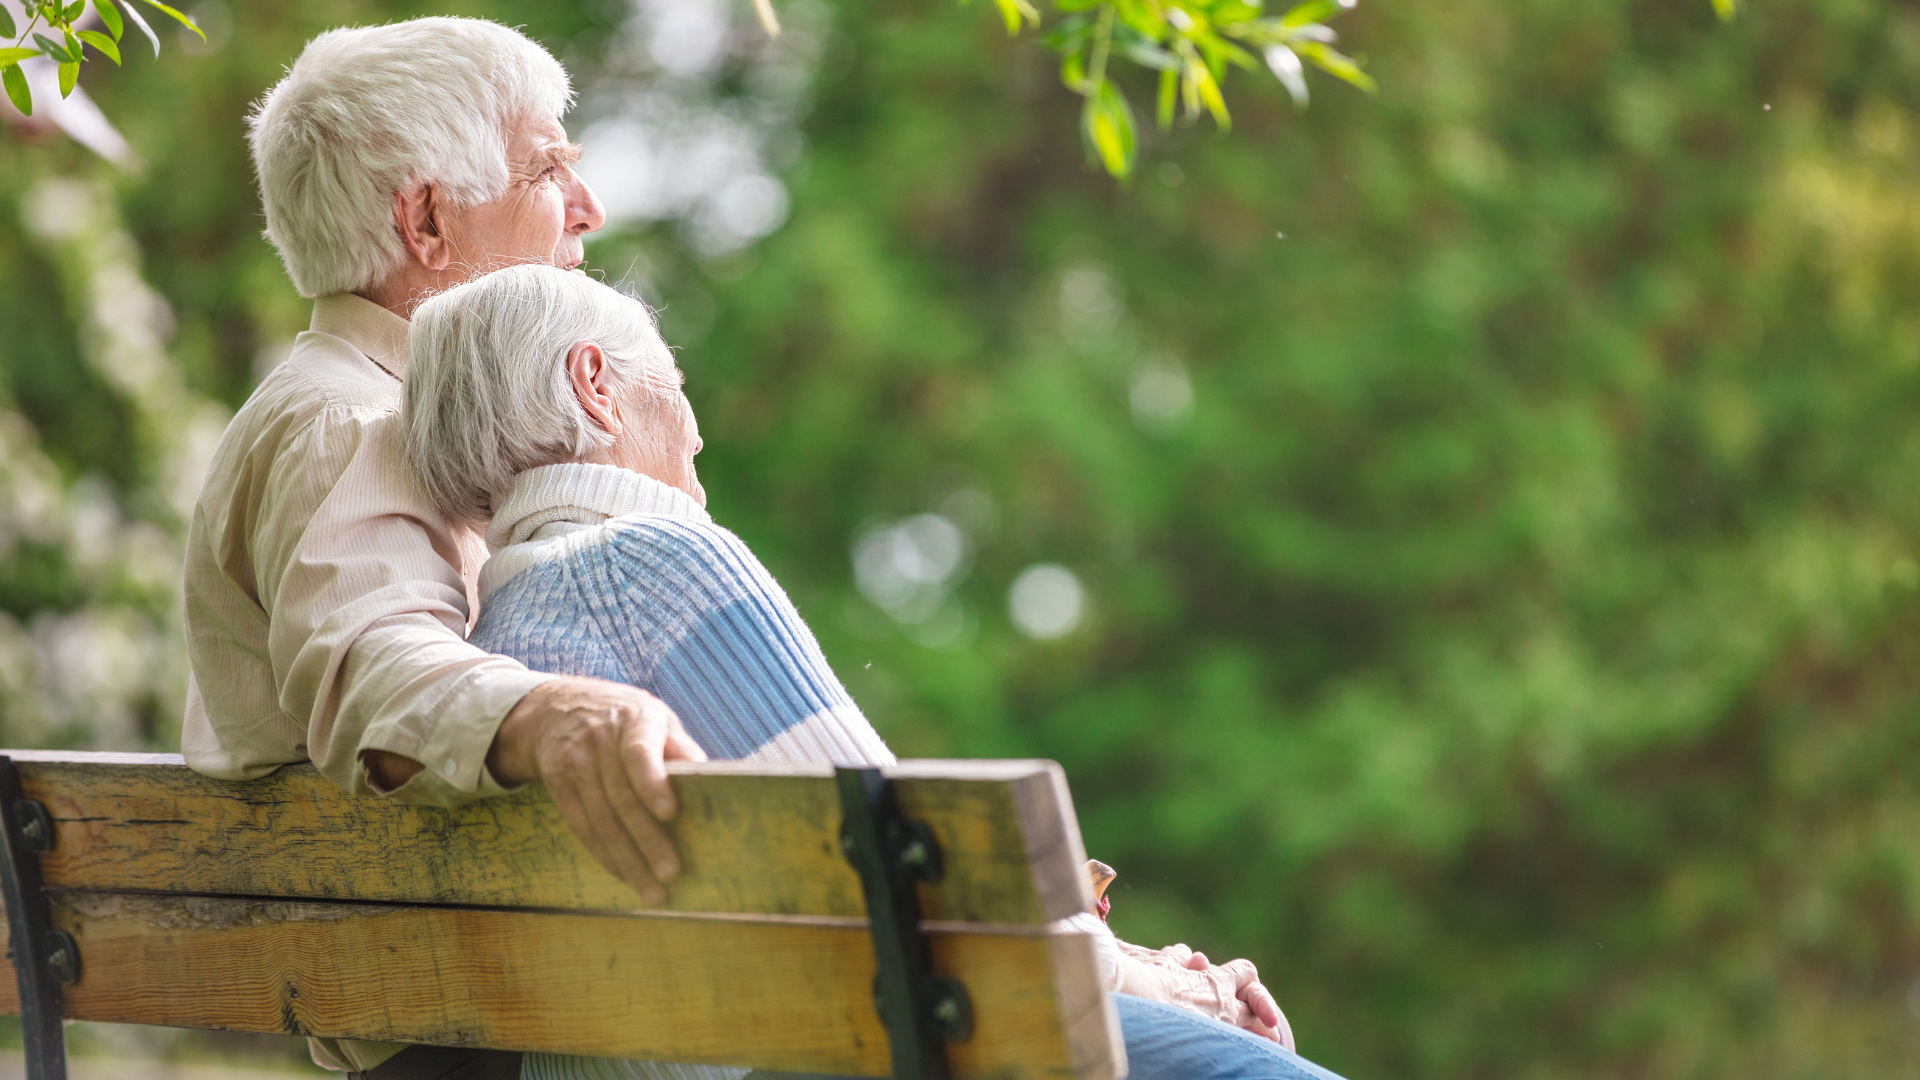 Daily Multivitamins Boost Memory in Elderly